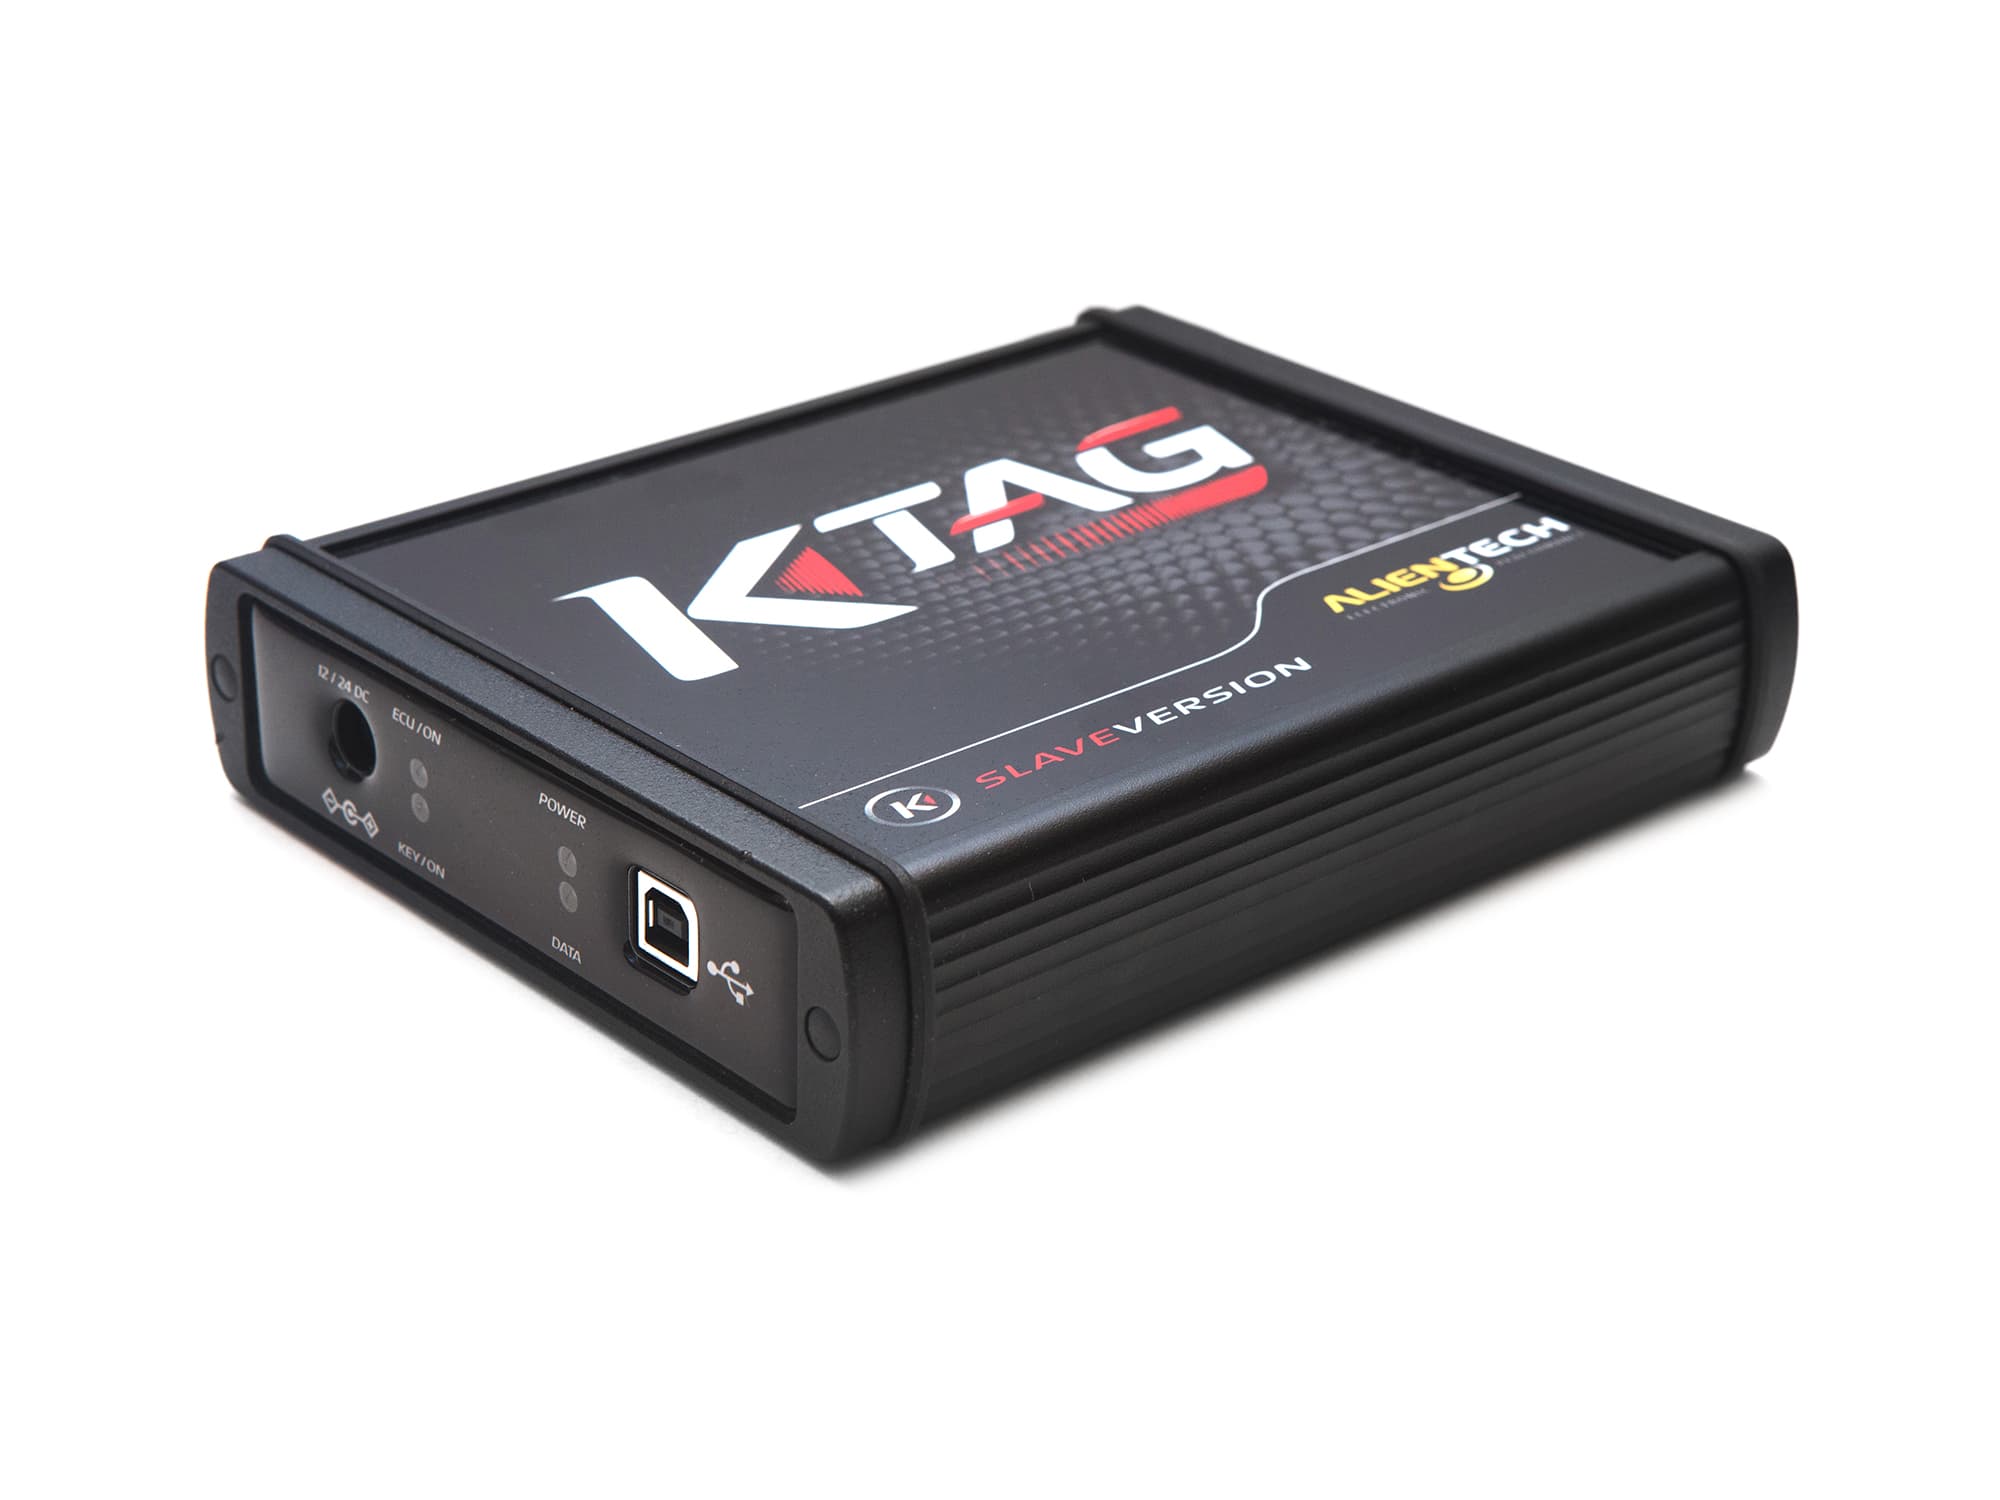 KESSv2 + K-TAG - Alientech Tools